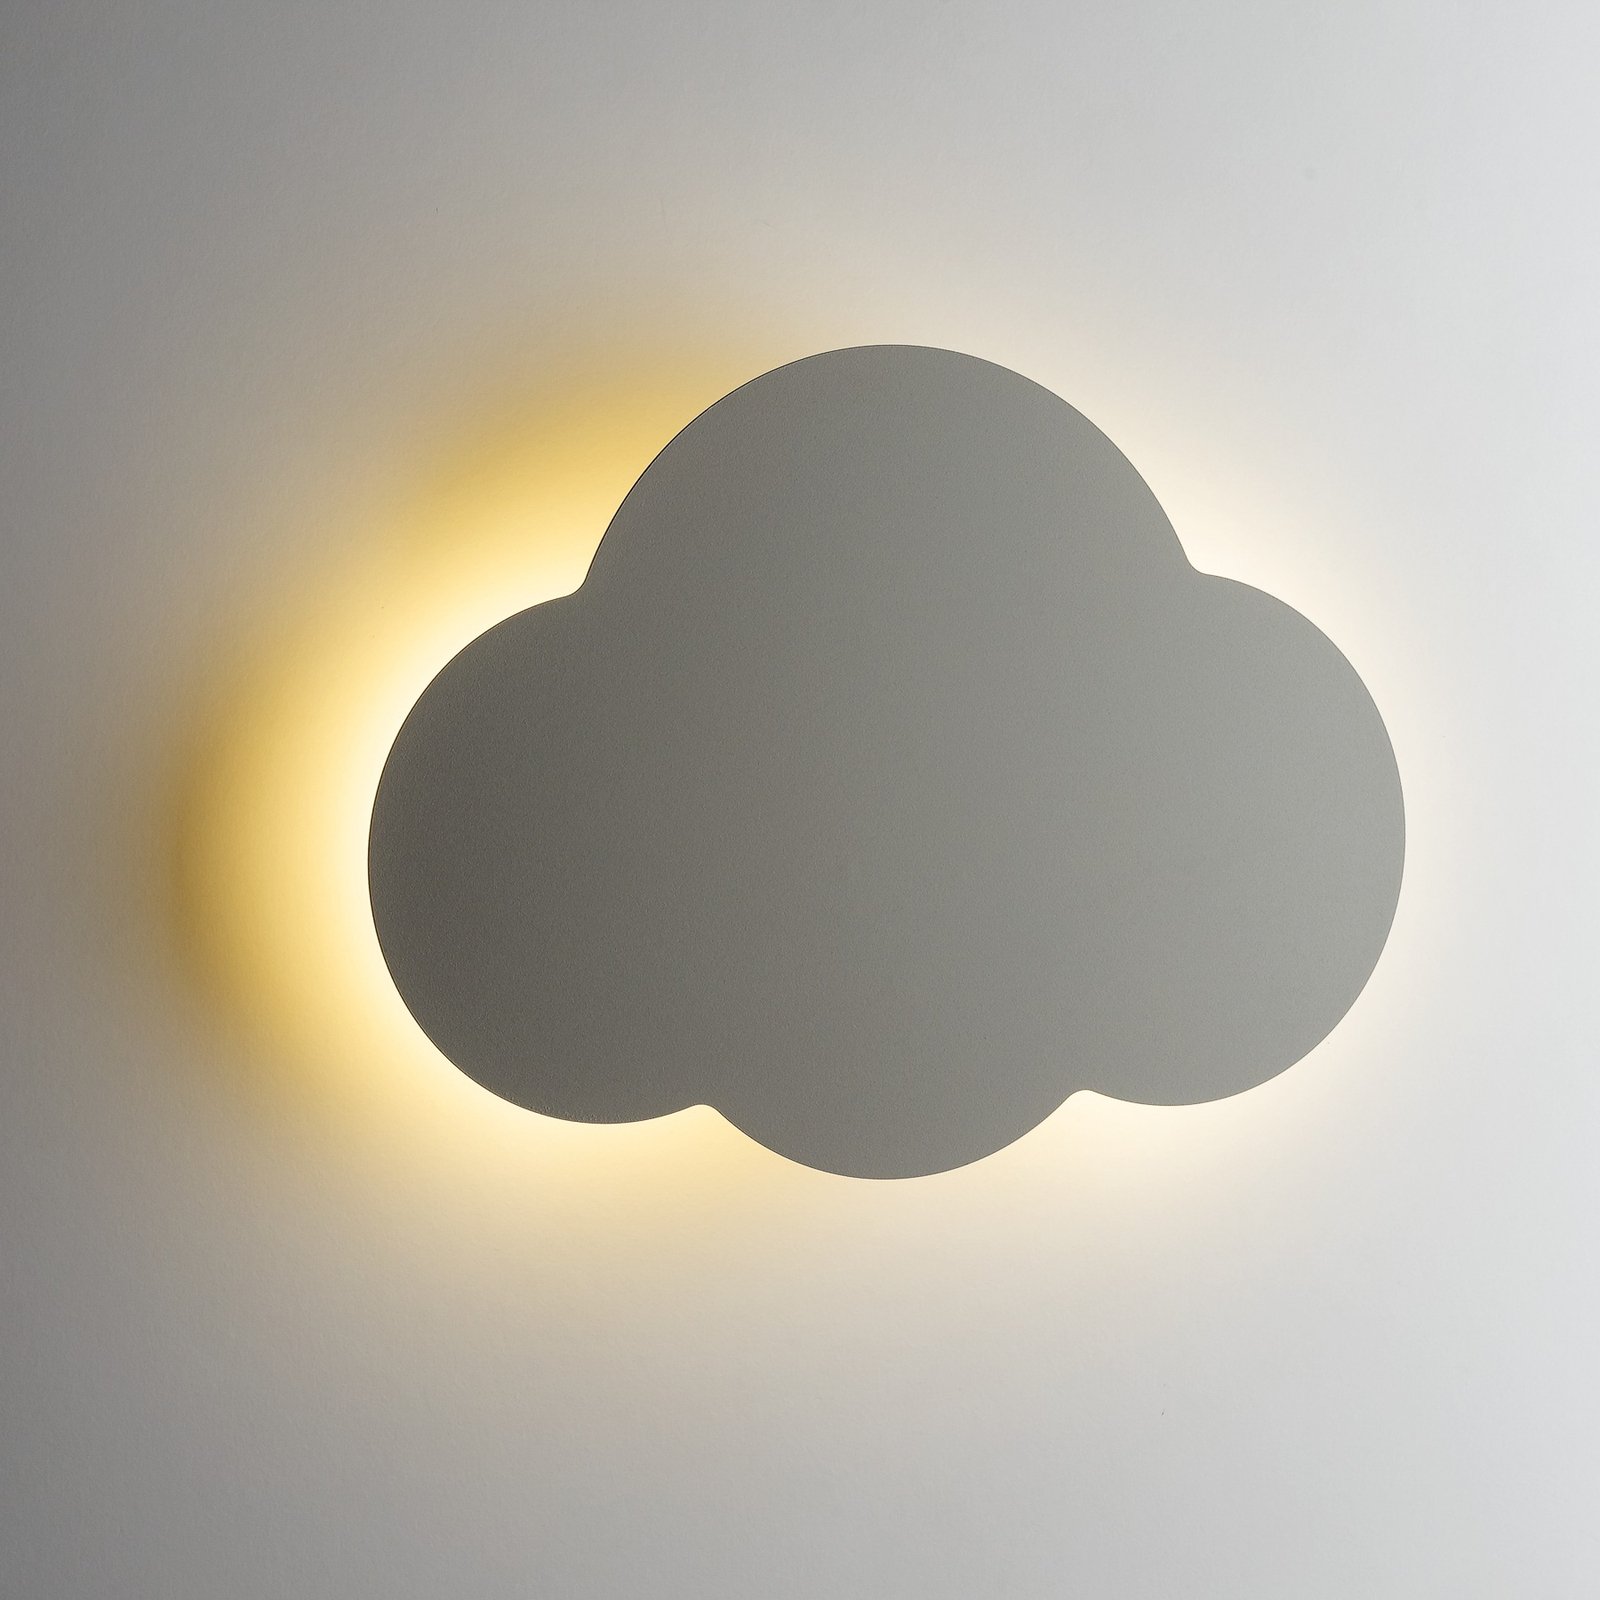 Wandlamp Cloud, beige, staal, indirect licht, 38 x 27 cm